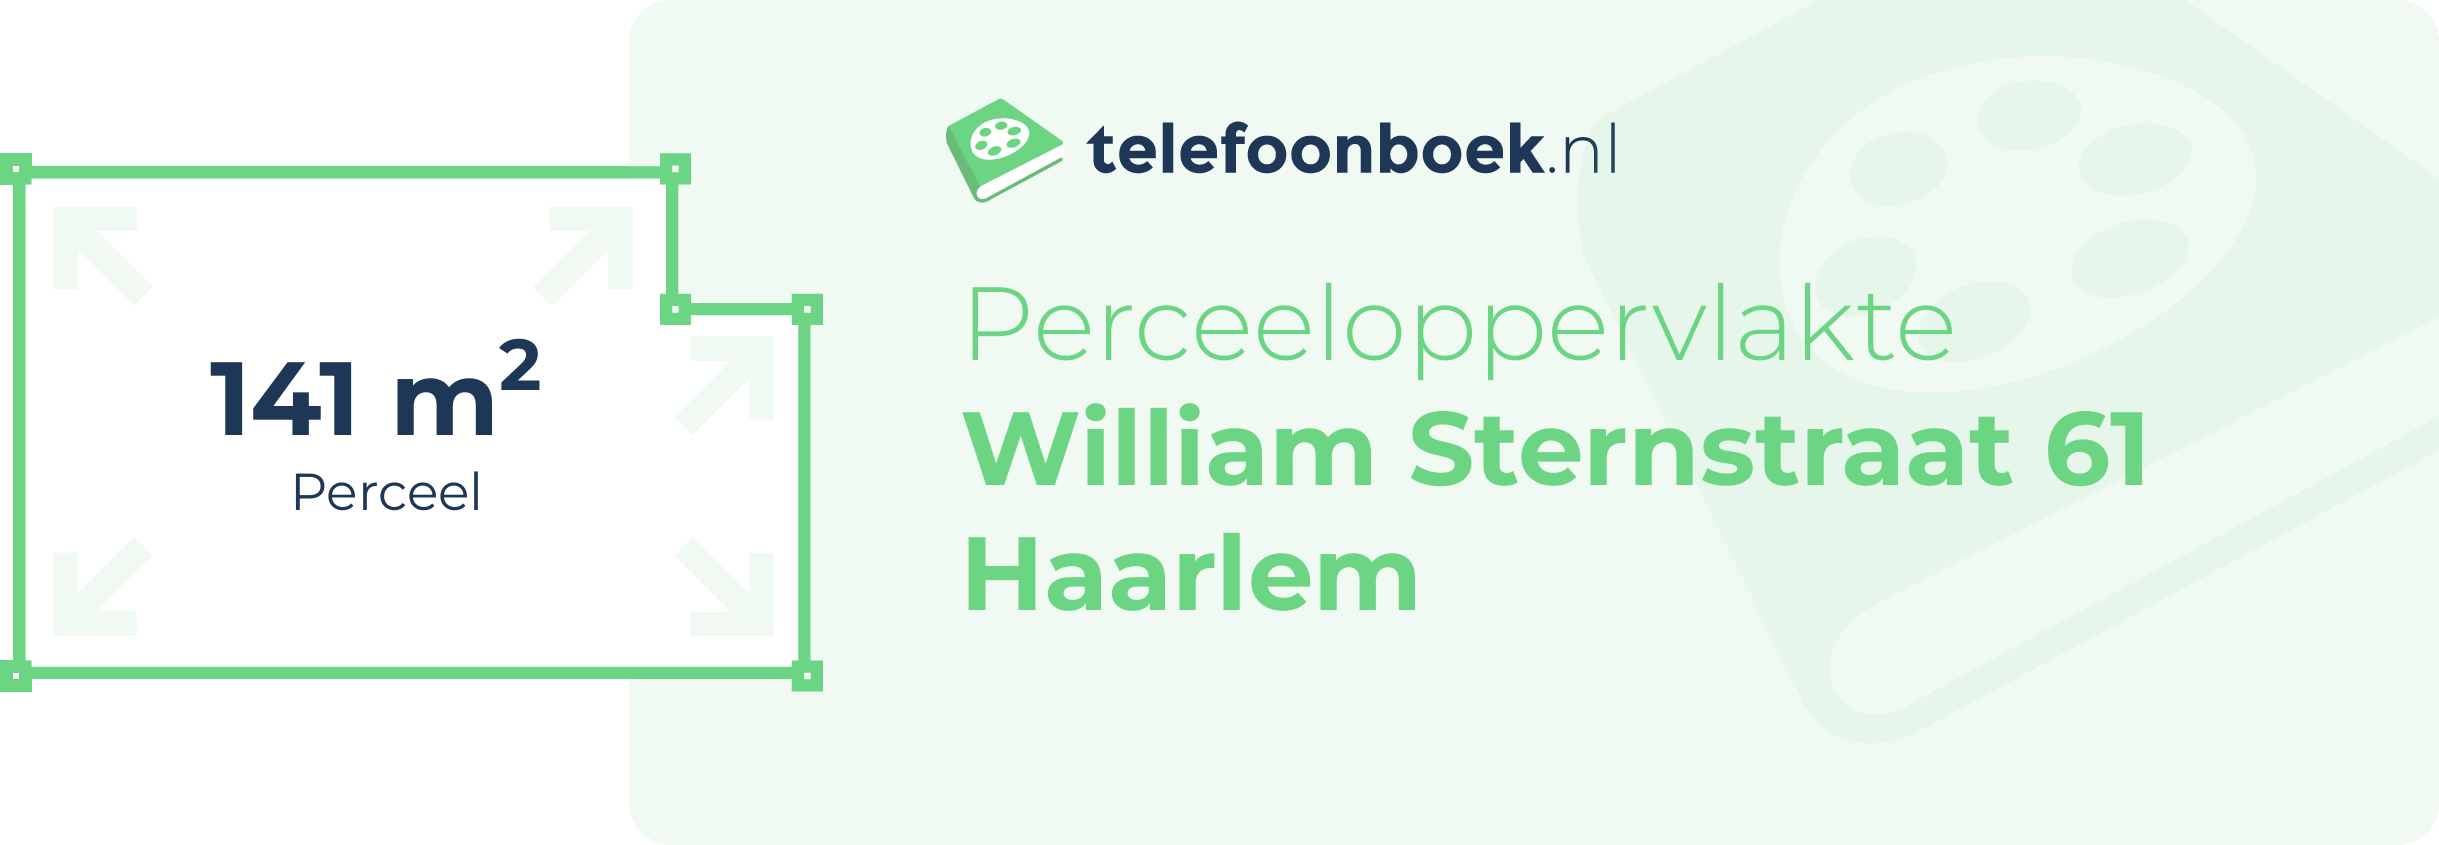 Perceeloppervlakte William Sternstraat 61 Haarlem